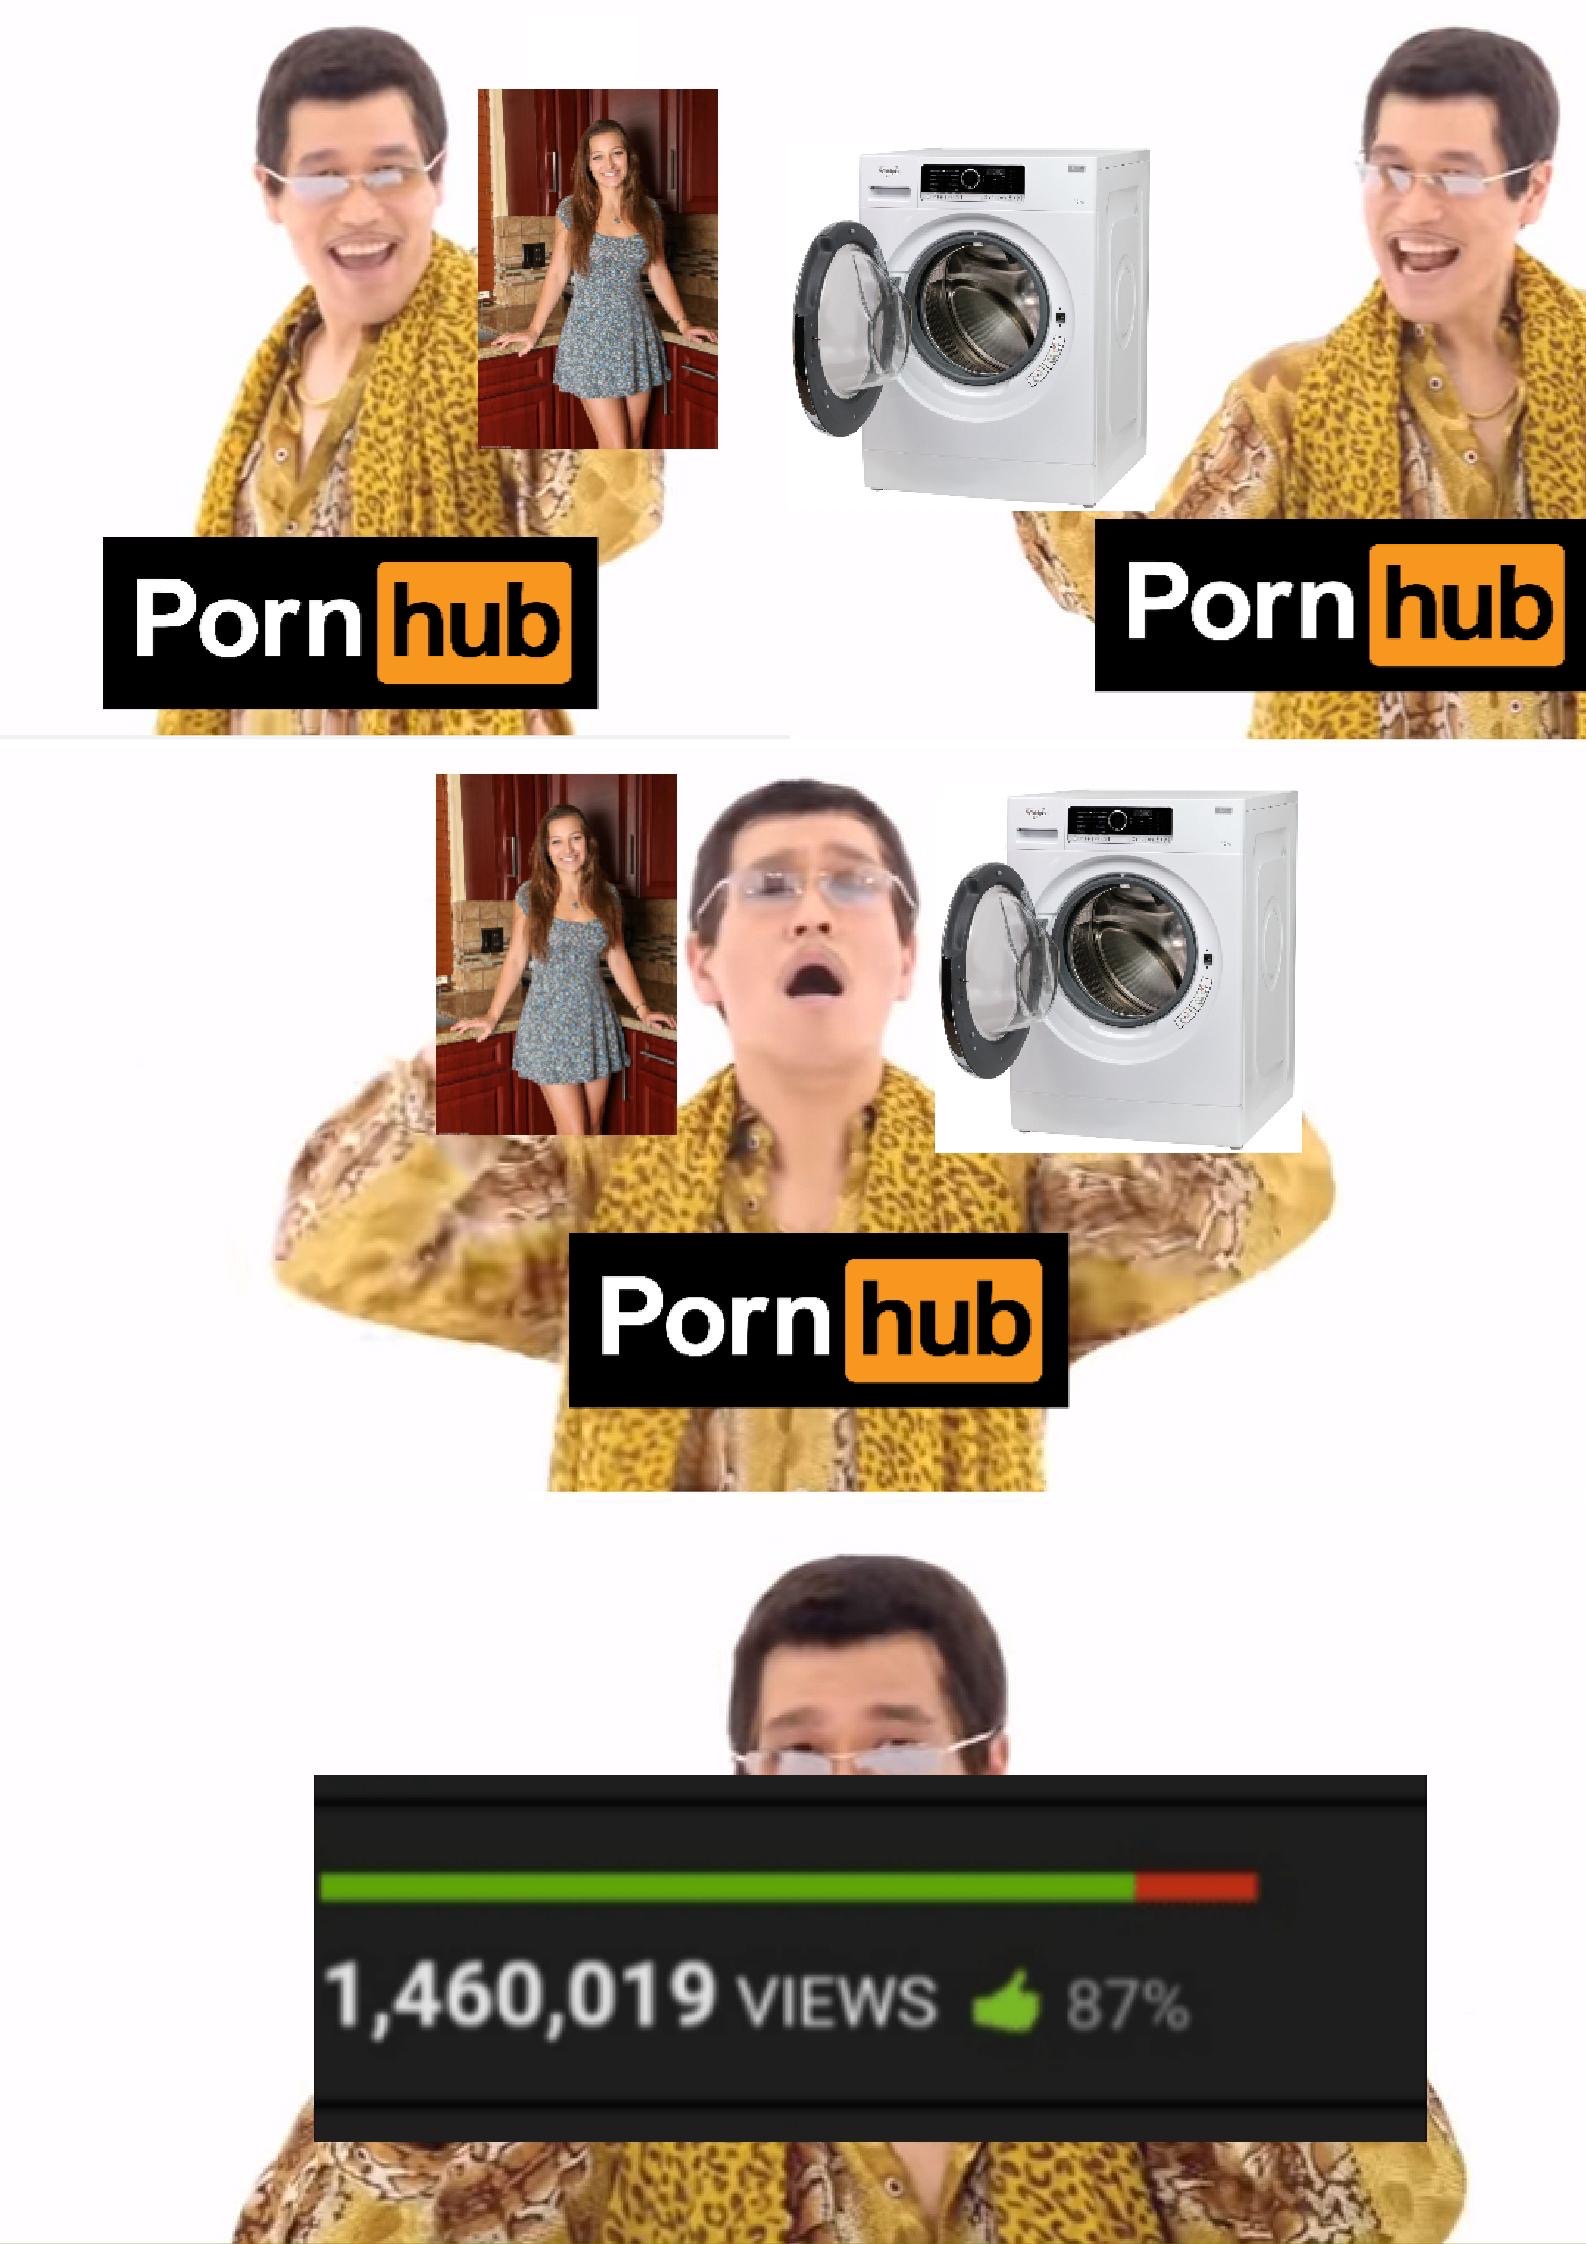 hugeplateofketchup8 - Porn hub Porn hub Porn hub 1,460,019 Views 87%